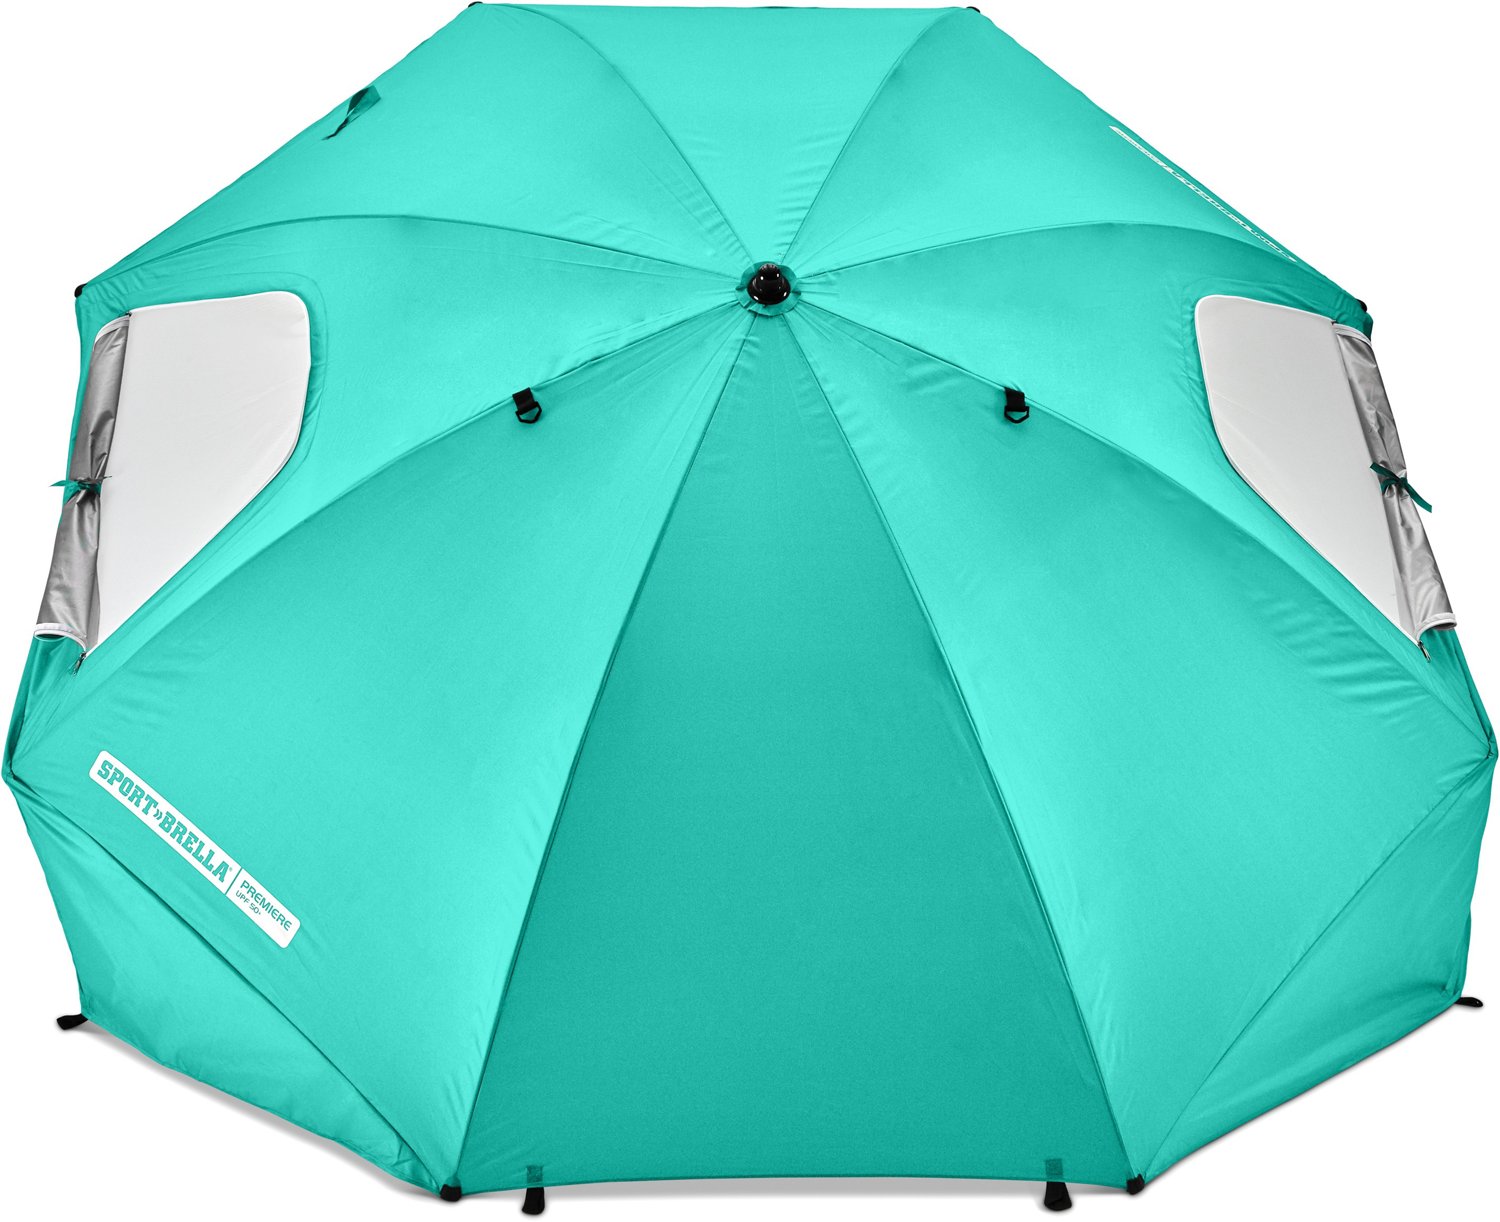 Sport-Brella Premiere Seafoam Umbrella                                                                                           - view number 1 selected